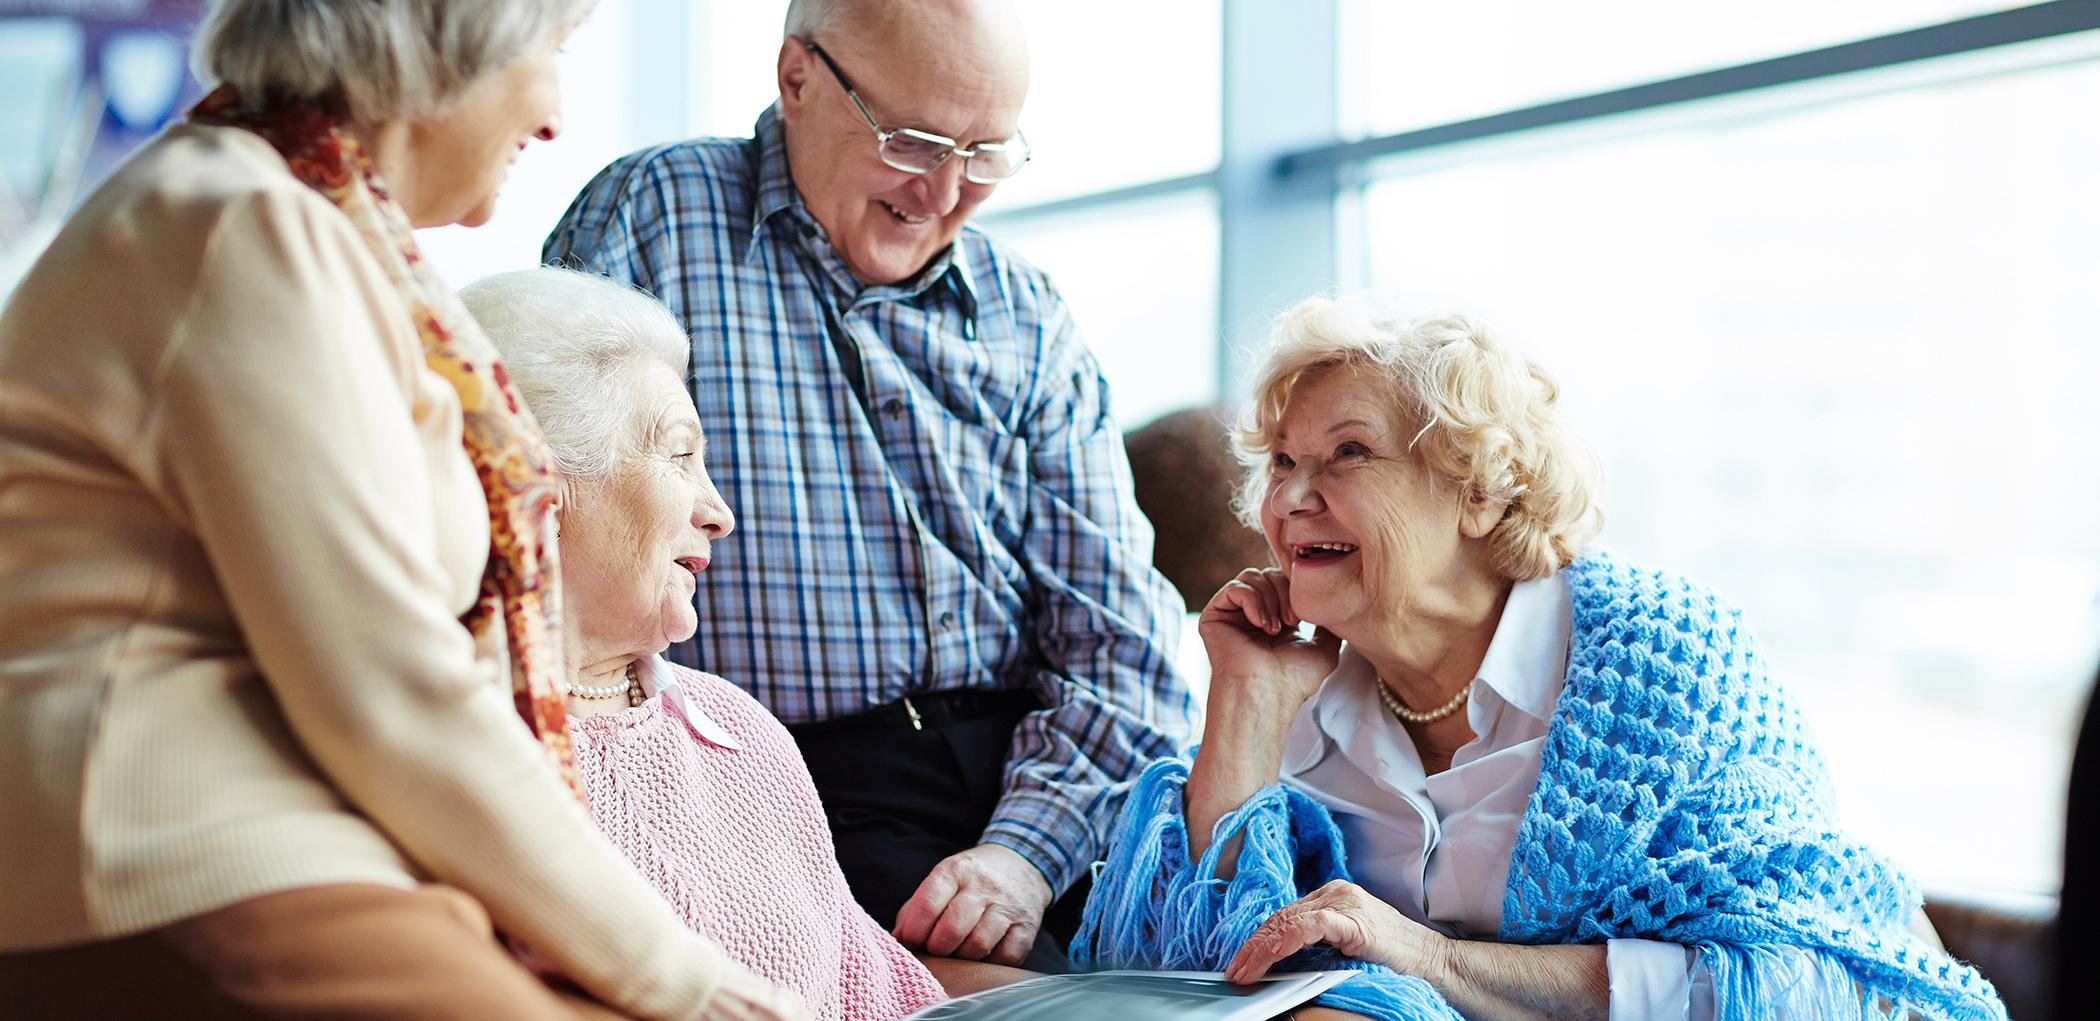 4 elderly people in conversation around armchair laughing